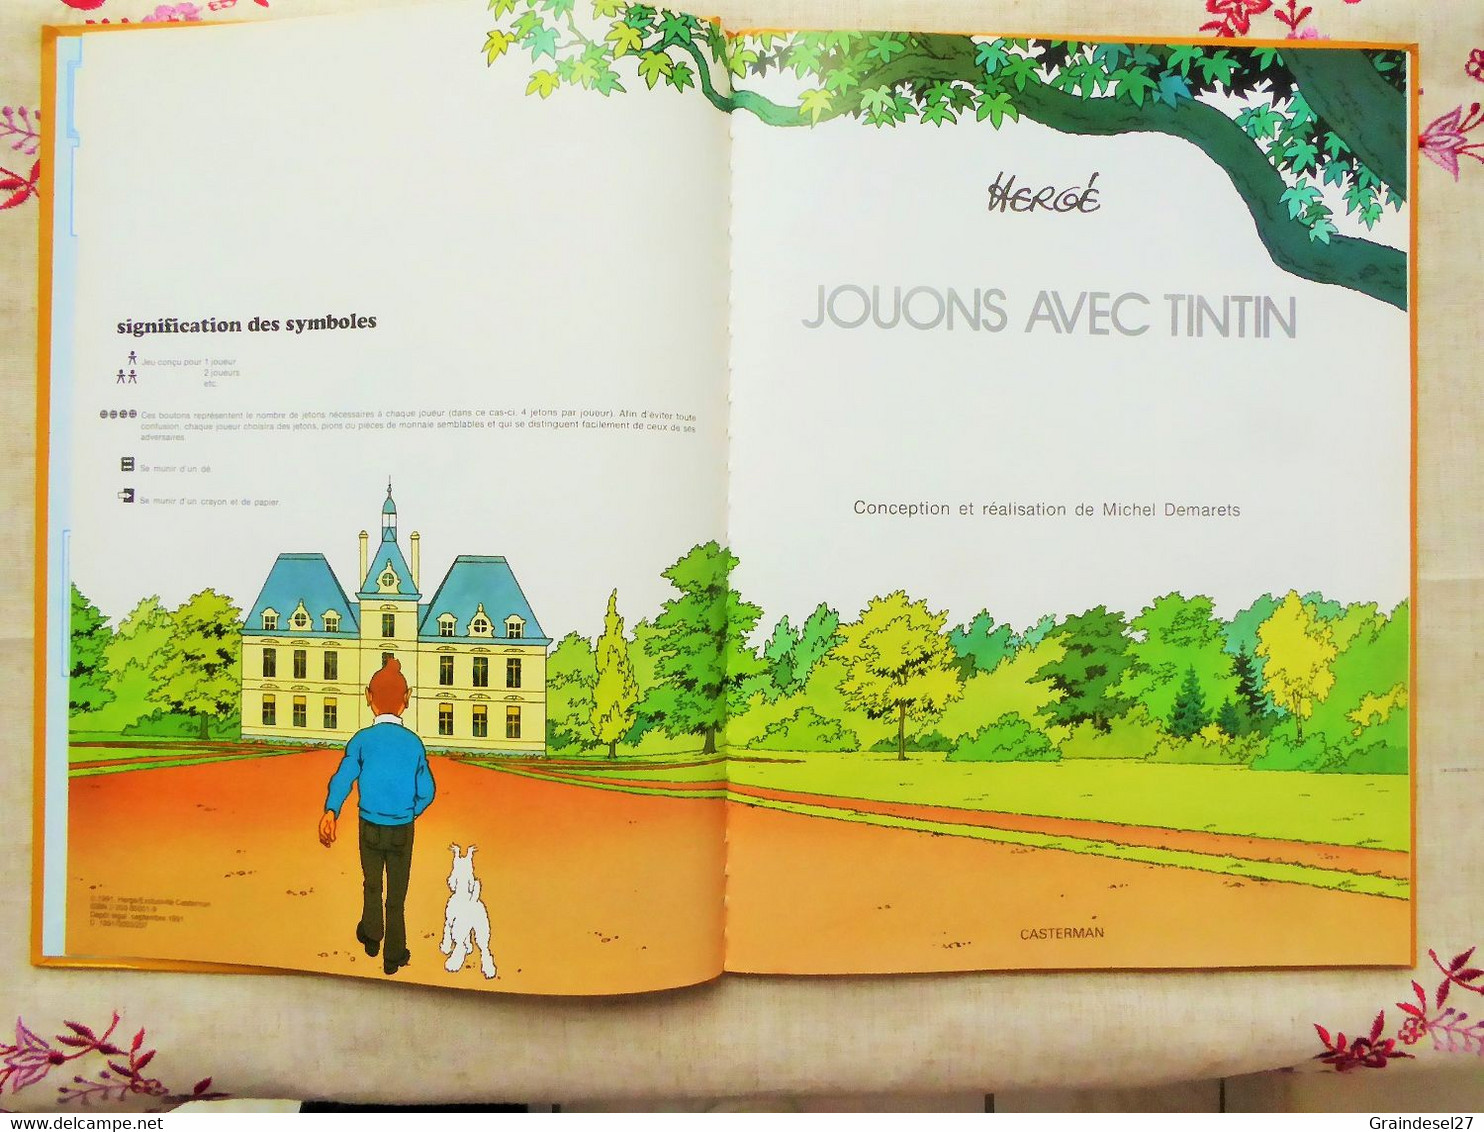 Album de jeu "Jouons avec Tintin" Hergé 1991. Etat neuf